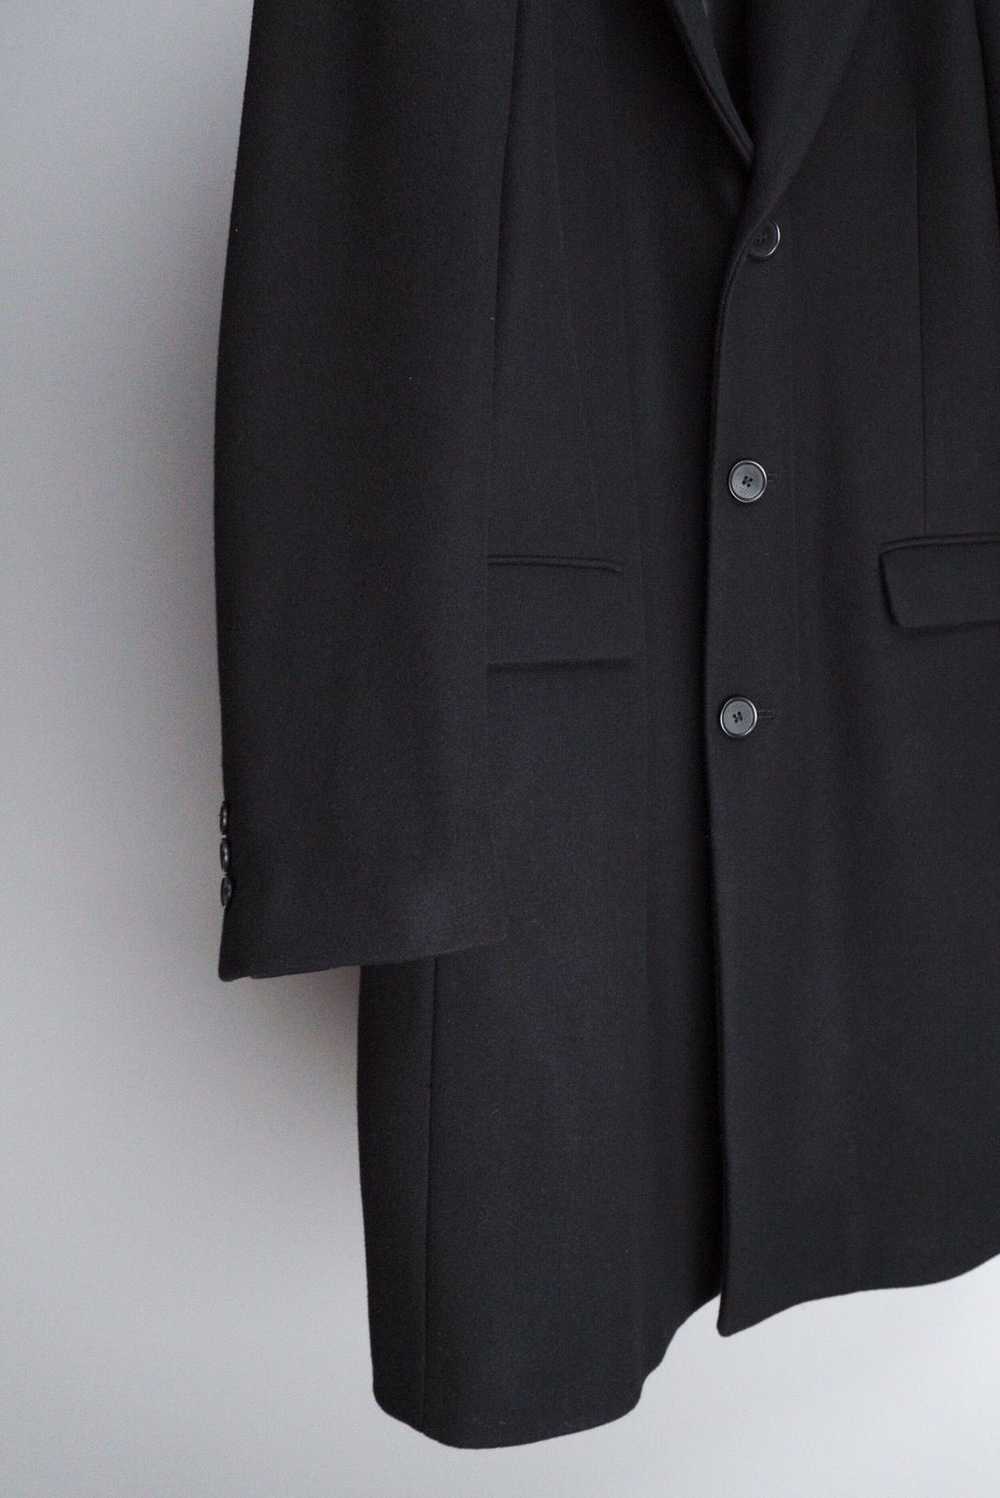 Sandro Sandro paris classic black wool coat jacket - image 5